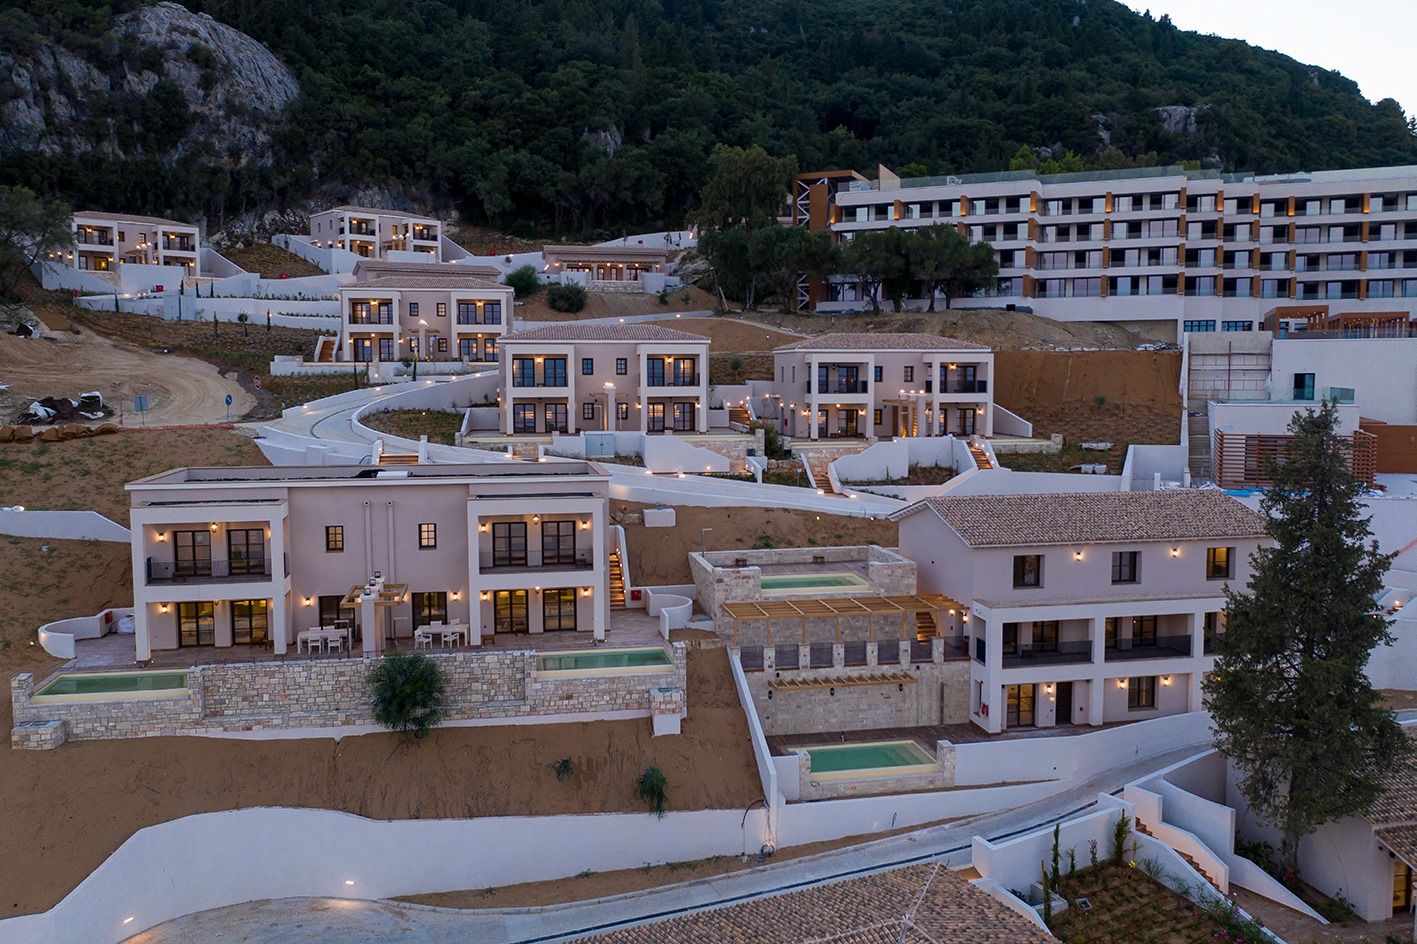 Angsana Corfu resort wooden roofs walls pergolas partitions